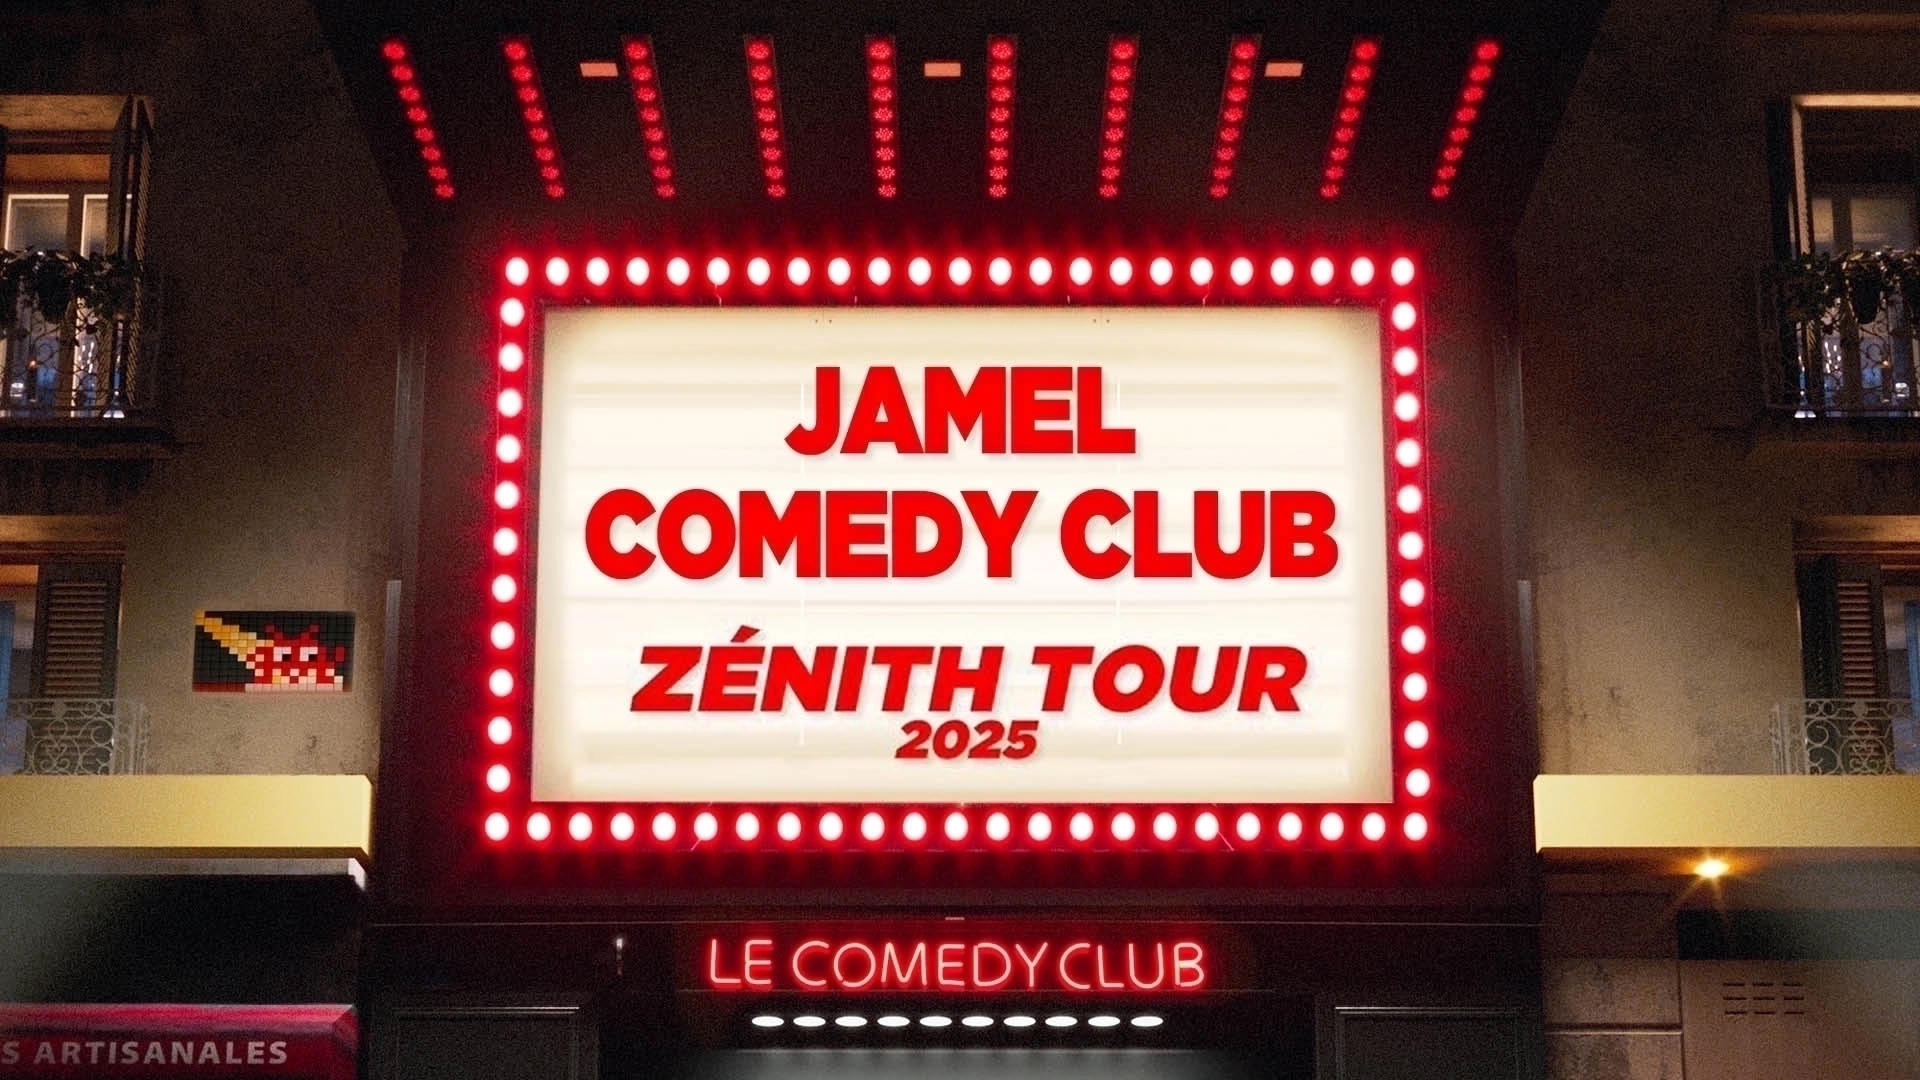 Jamel Comedy Club Zenith Tour 2025 en Rockhal Tickets